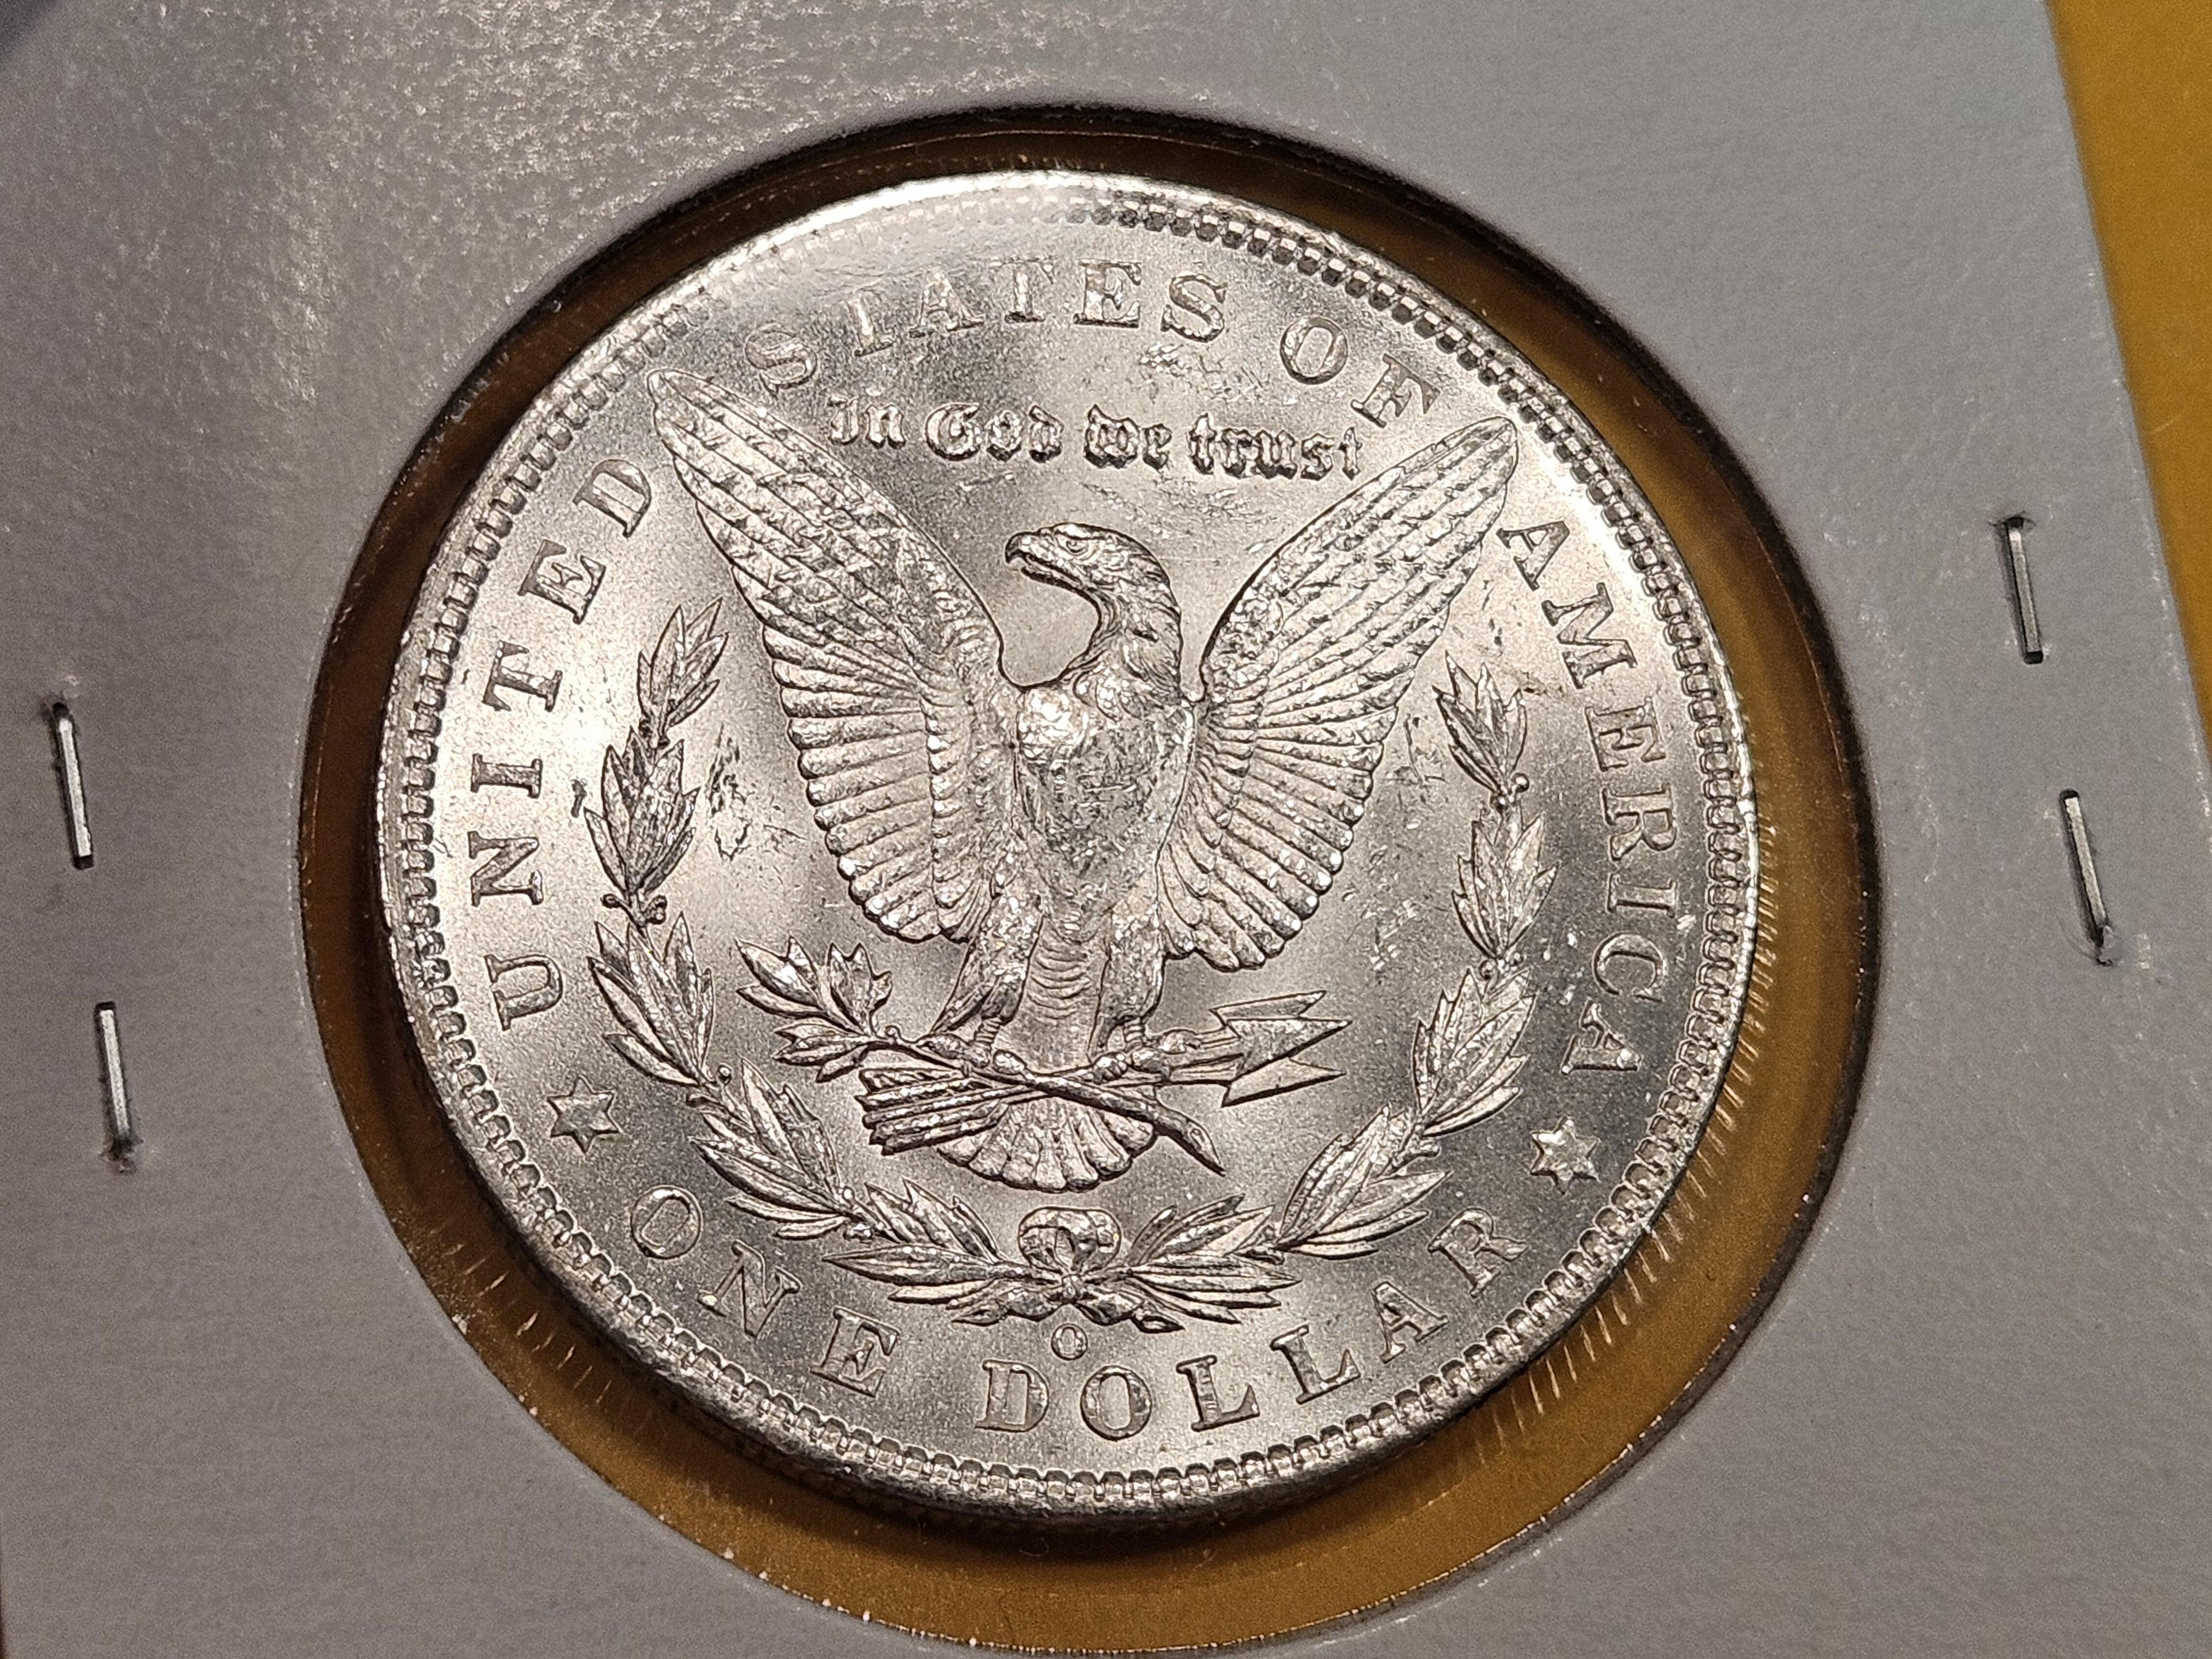 ** HIGHLIGHT ** Semi-Key 1903-O Morgan Dollar in Very Choice Brilliant Uncirculated